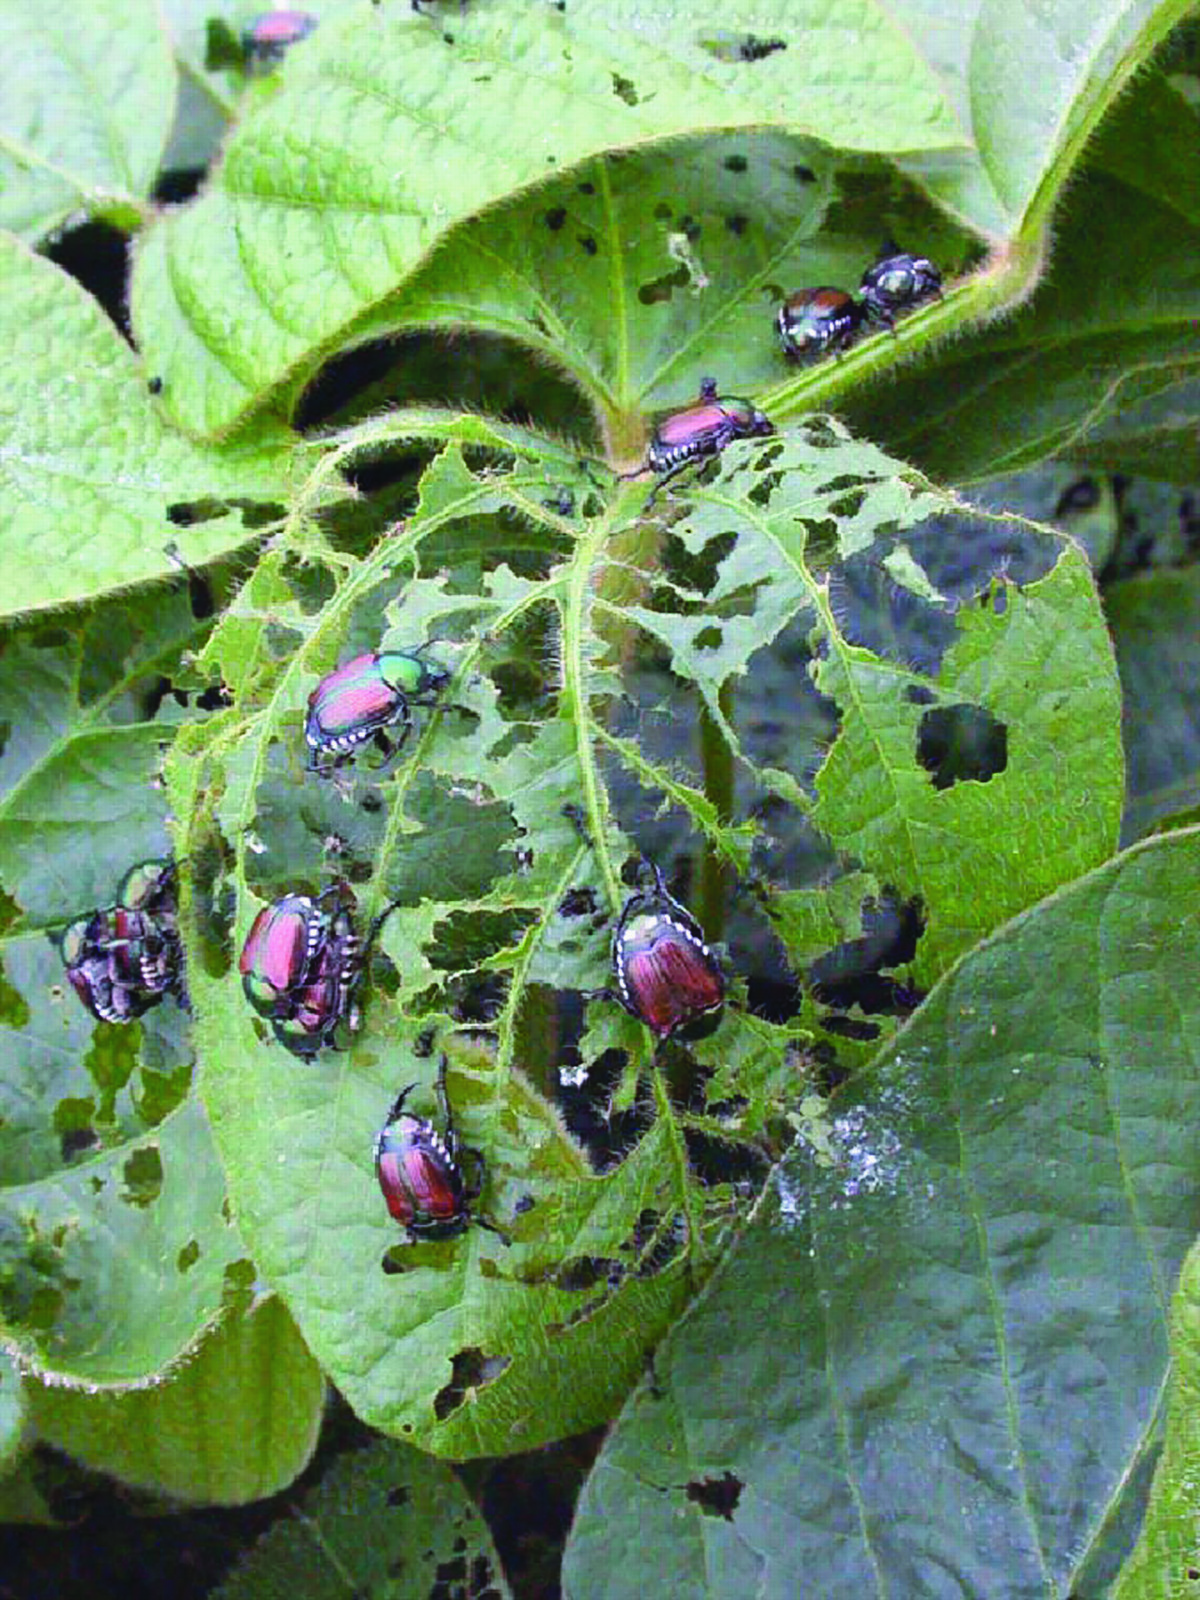 Japanese beetles consuming soybean leaves